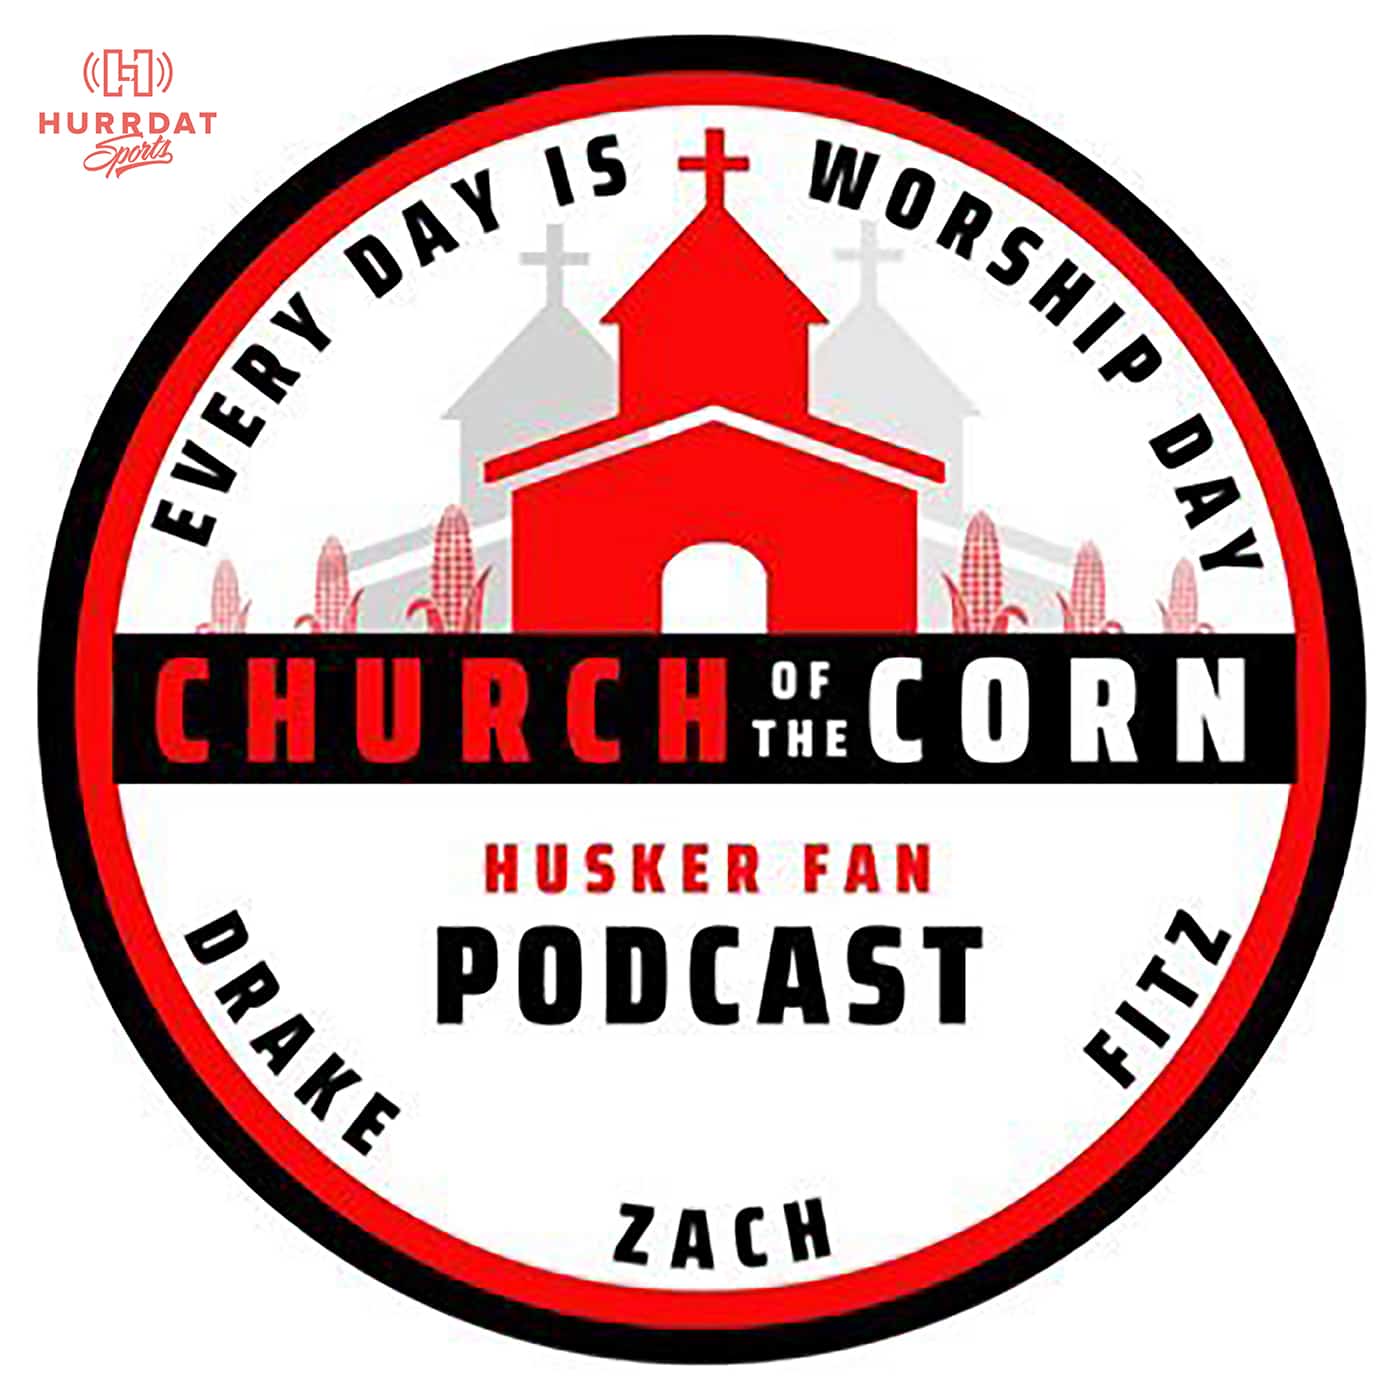 Church of CorN podcast artwork